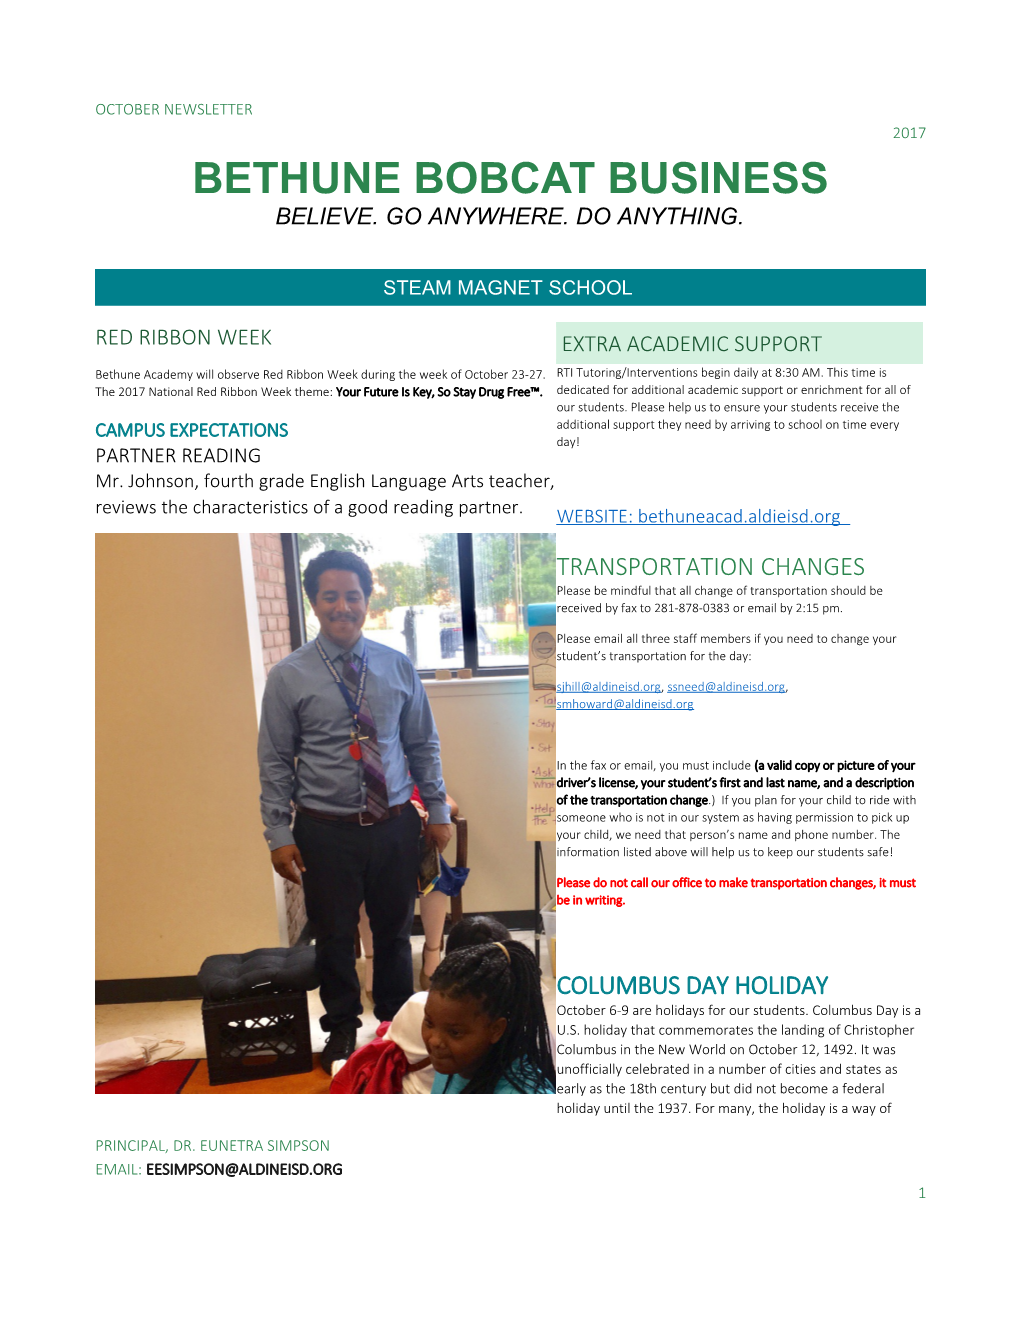 Bethune Bobcat Business